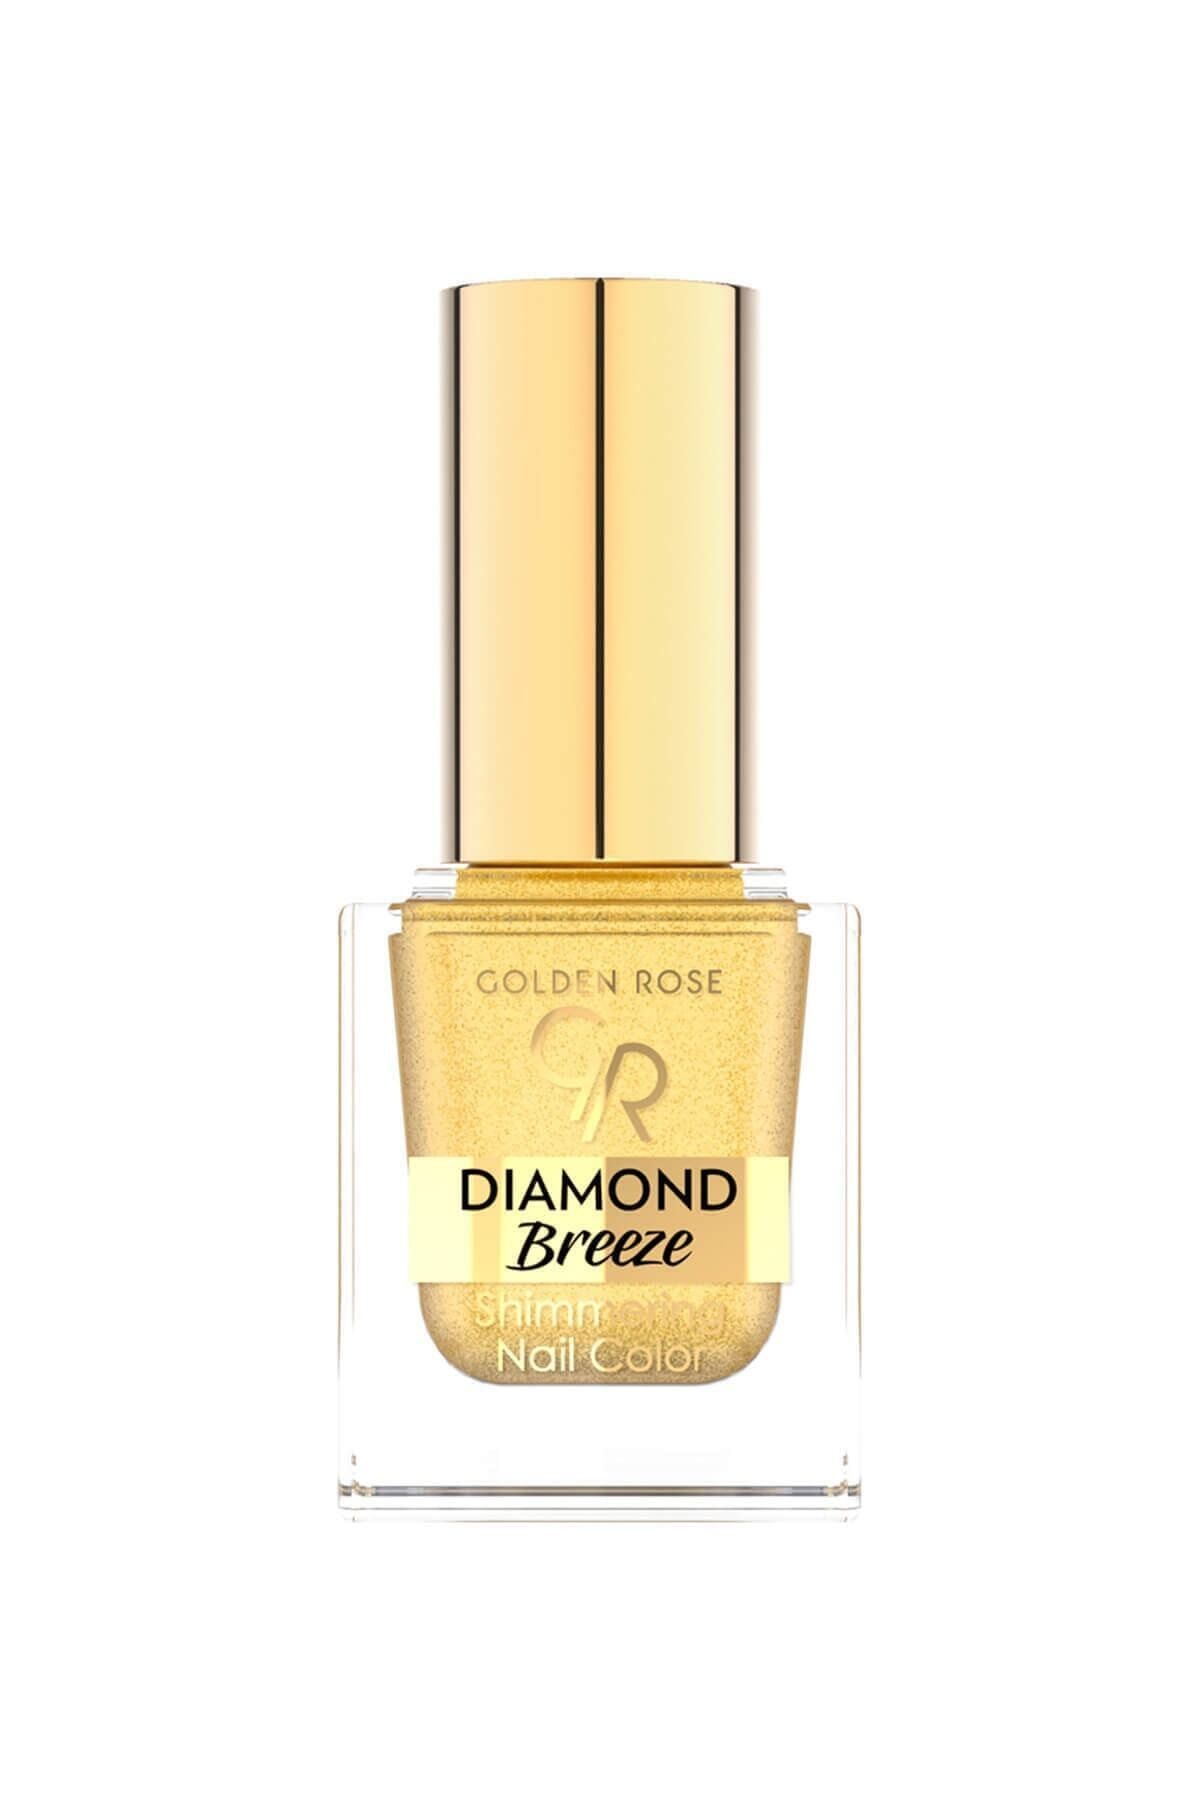 Golden Rose Oje - Diamond Breeze Shimmering Nail Color 01 24k Gold 8691190965686